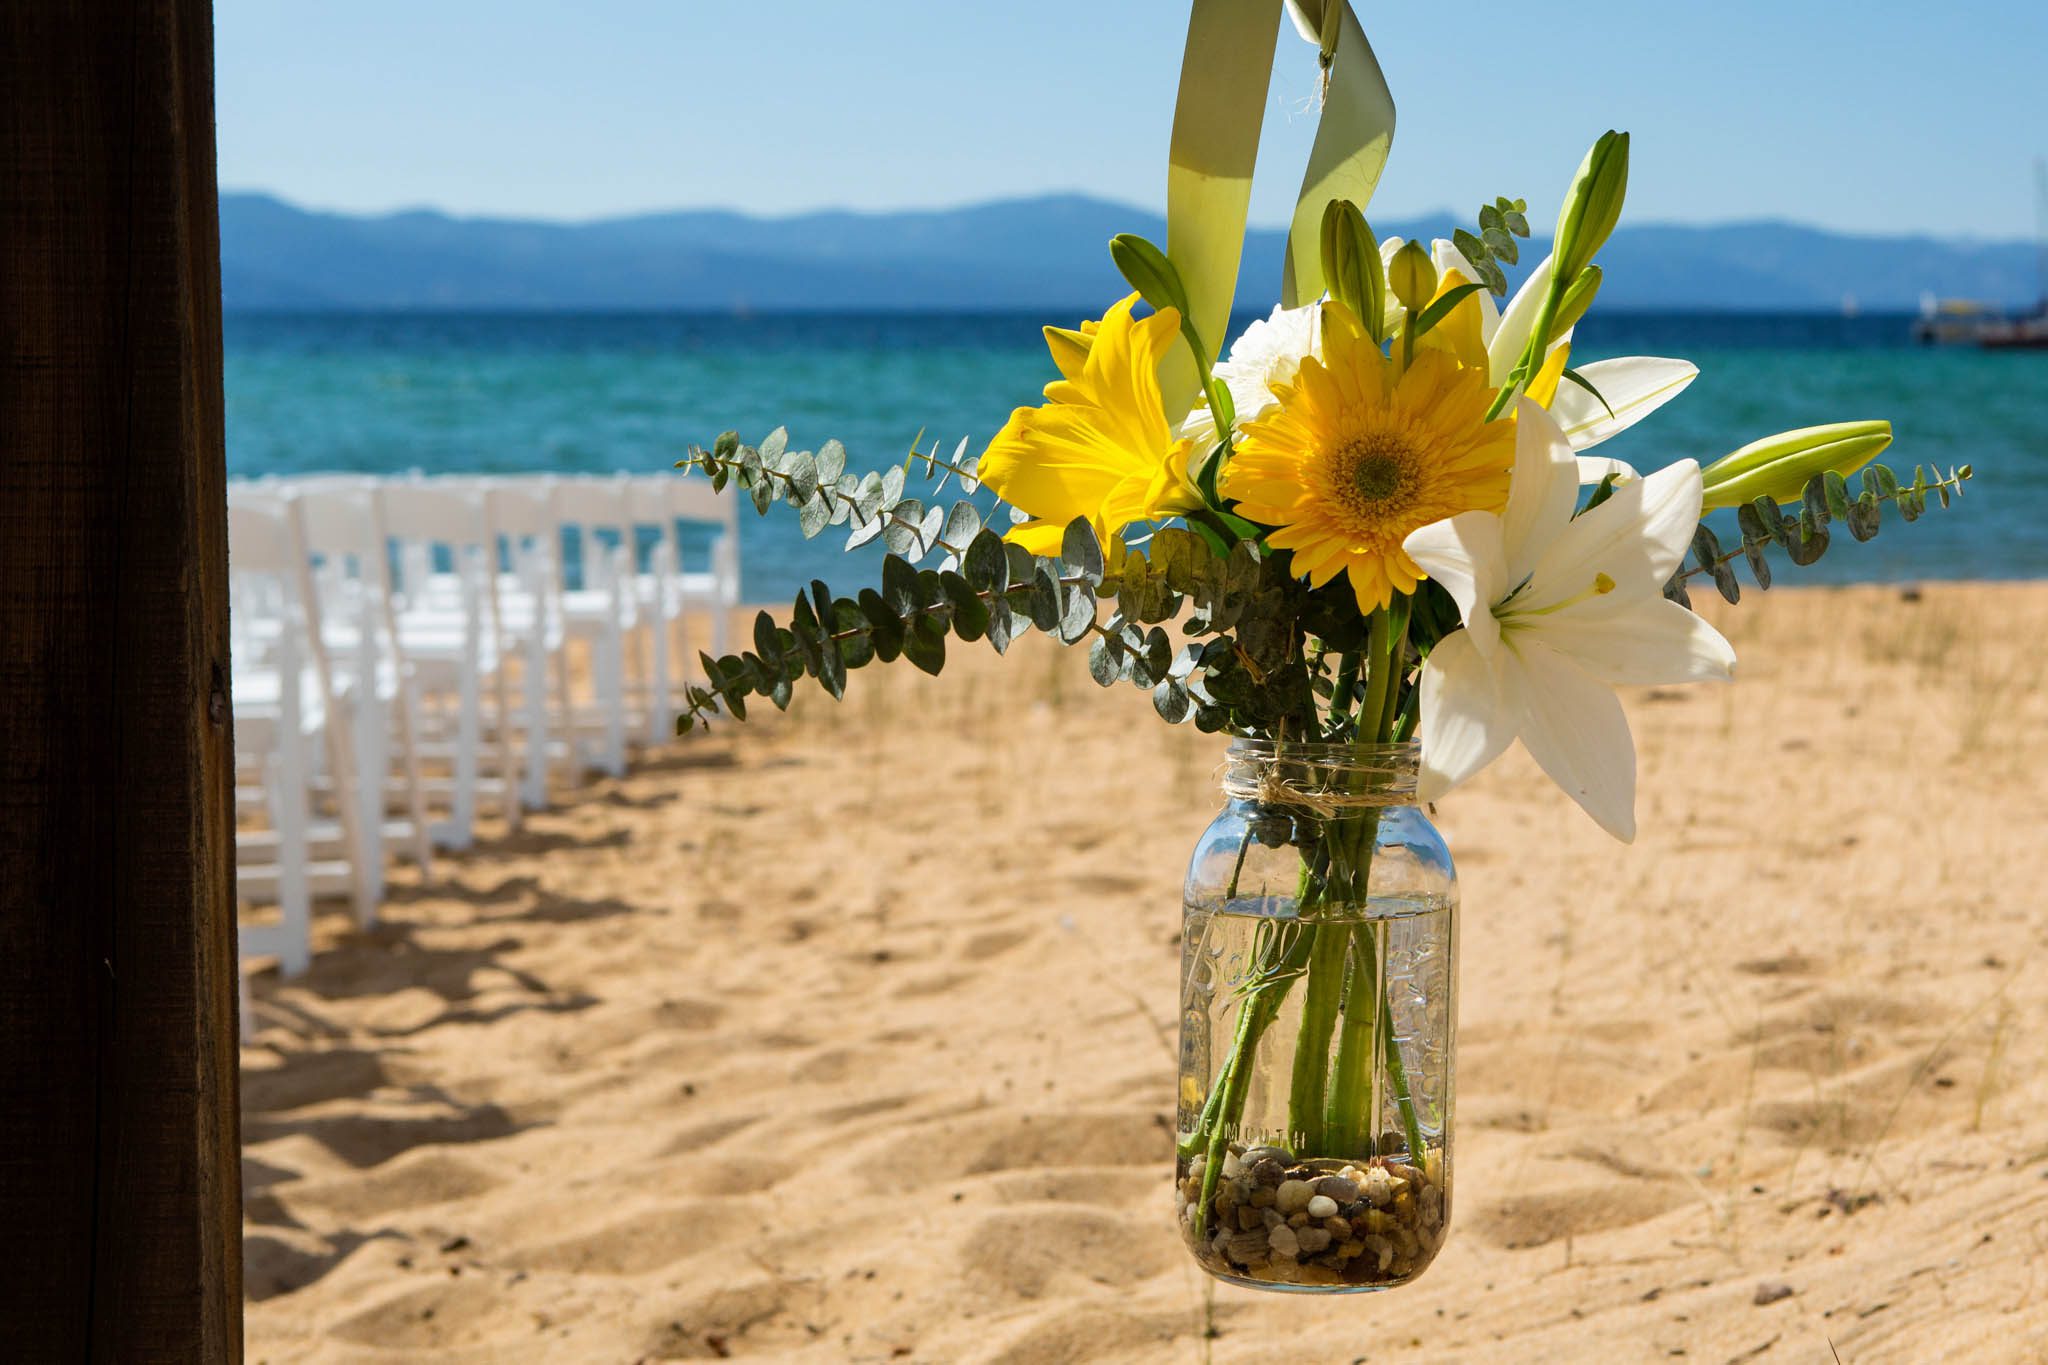 ceremony set-up, chairs, flowers – South Lake Tahoe lakefront beach wedding nina photographer